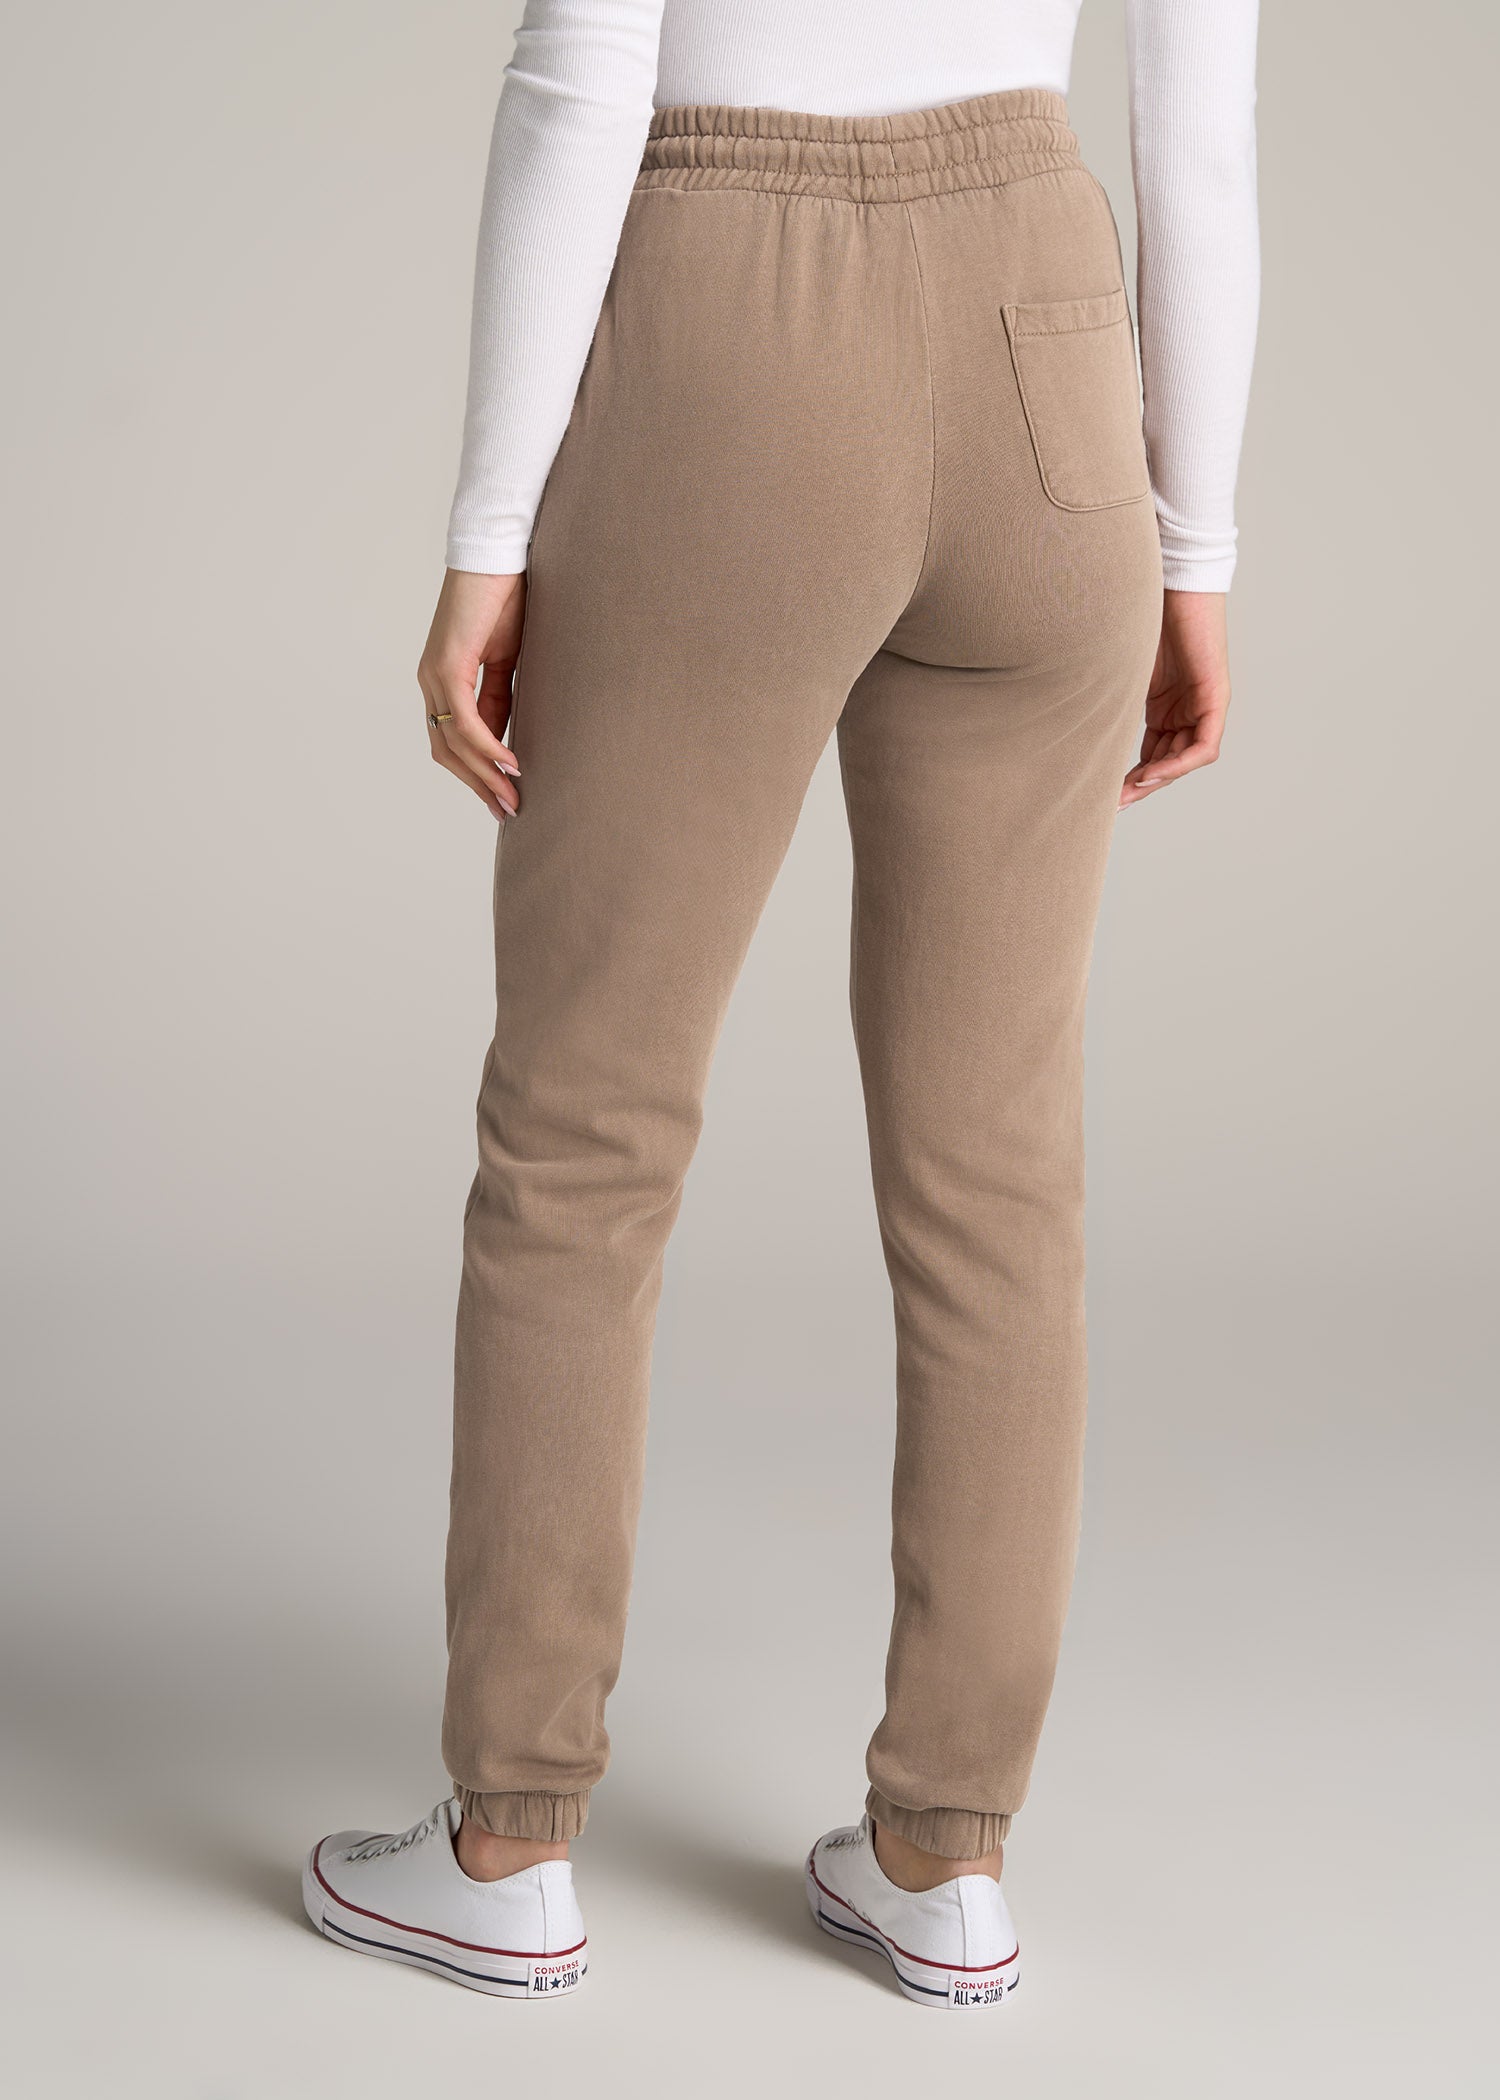 Women's Tall Wearever High-Waisted Garment-Dyed Sweatpants Latte